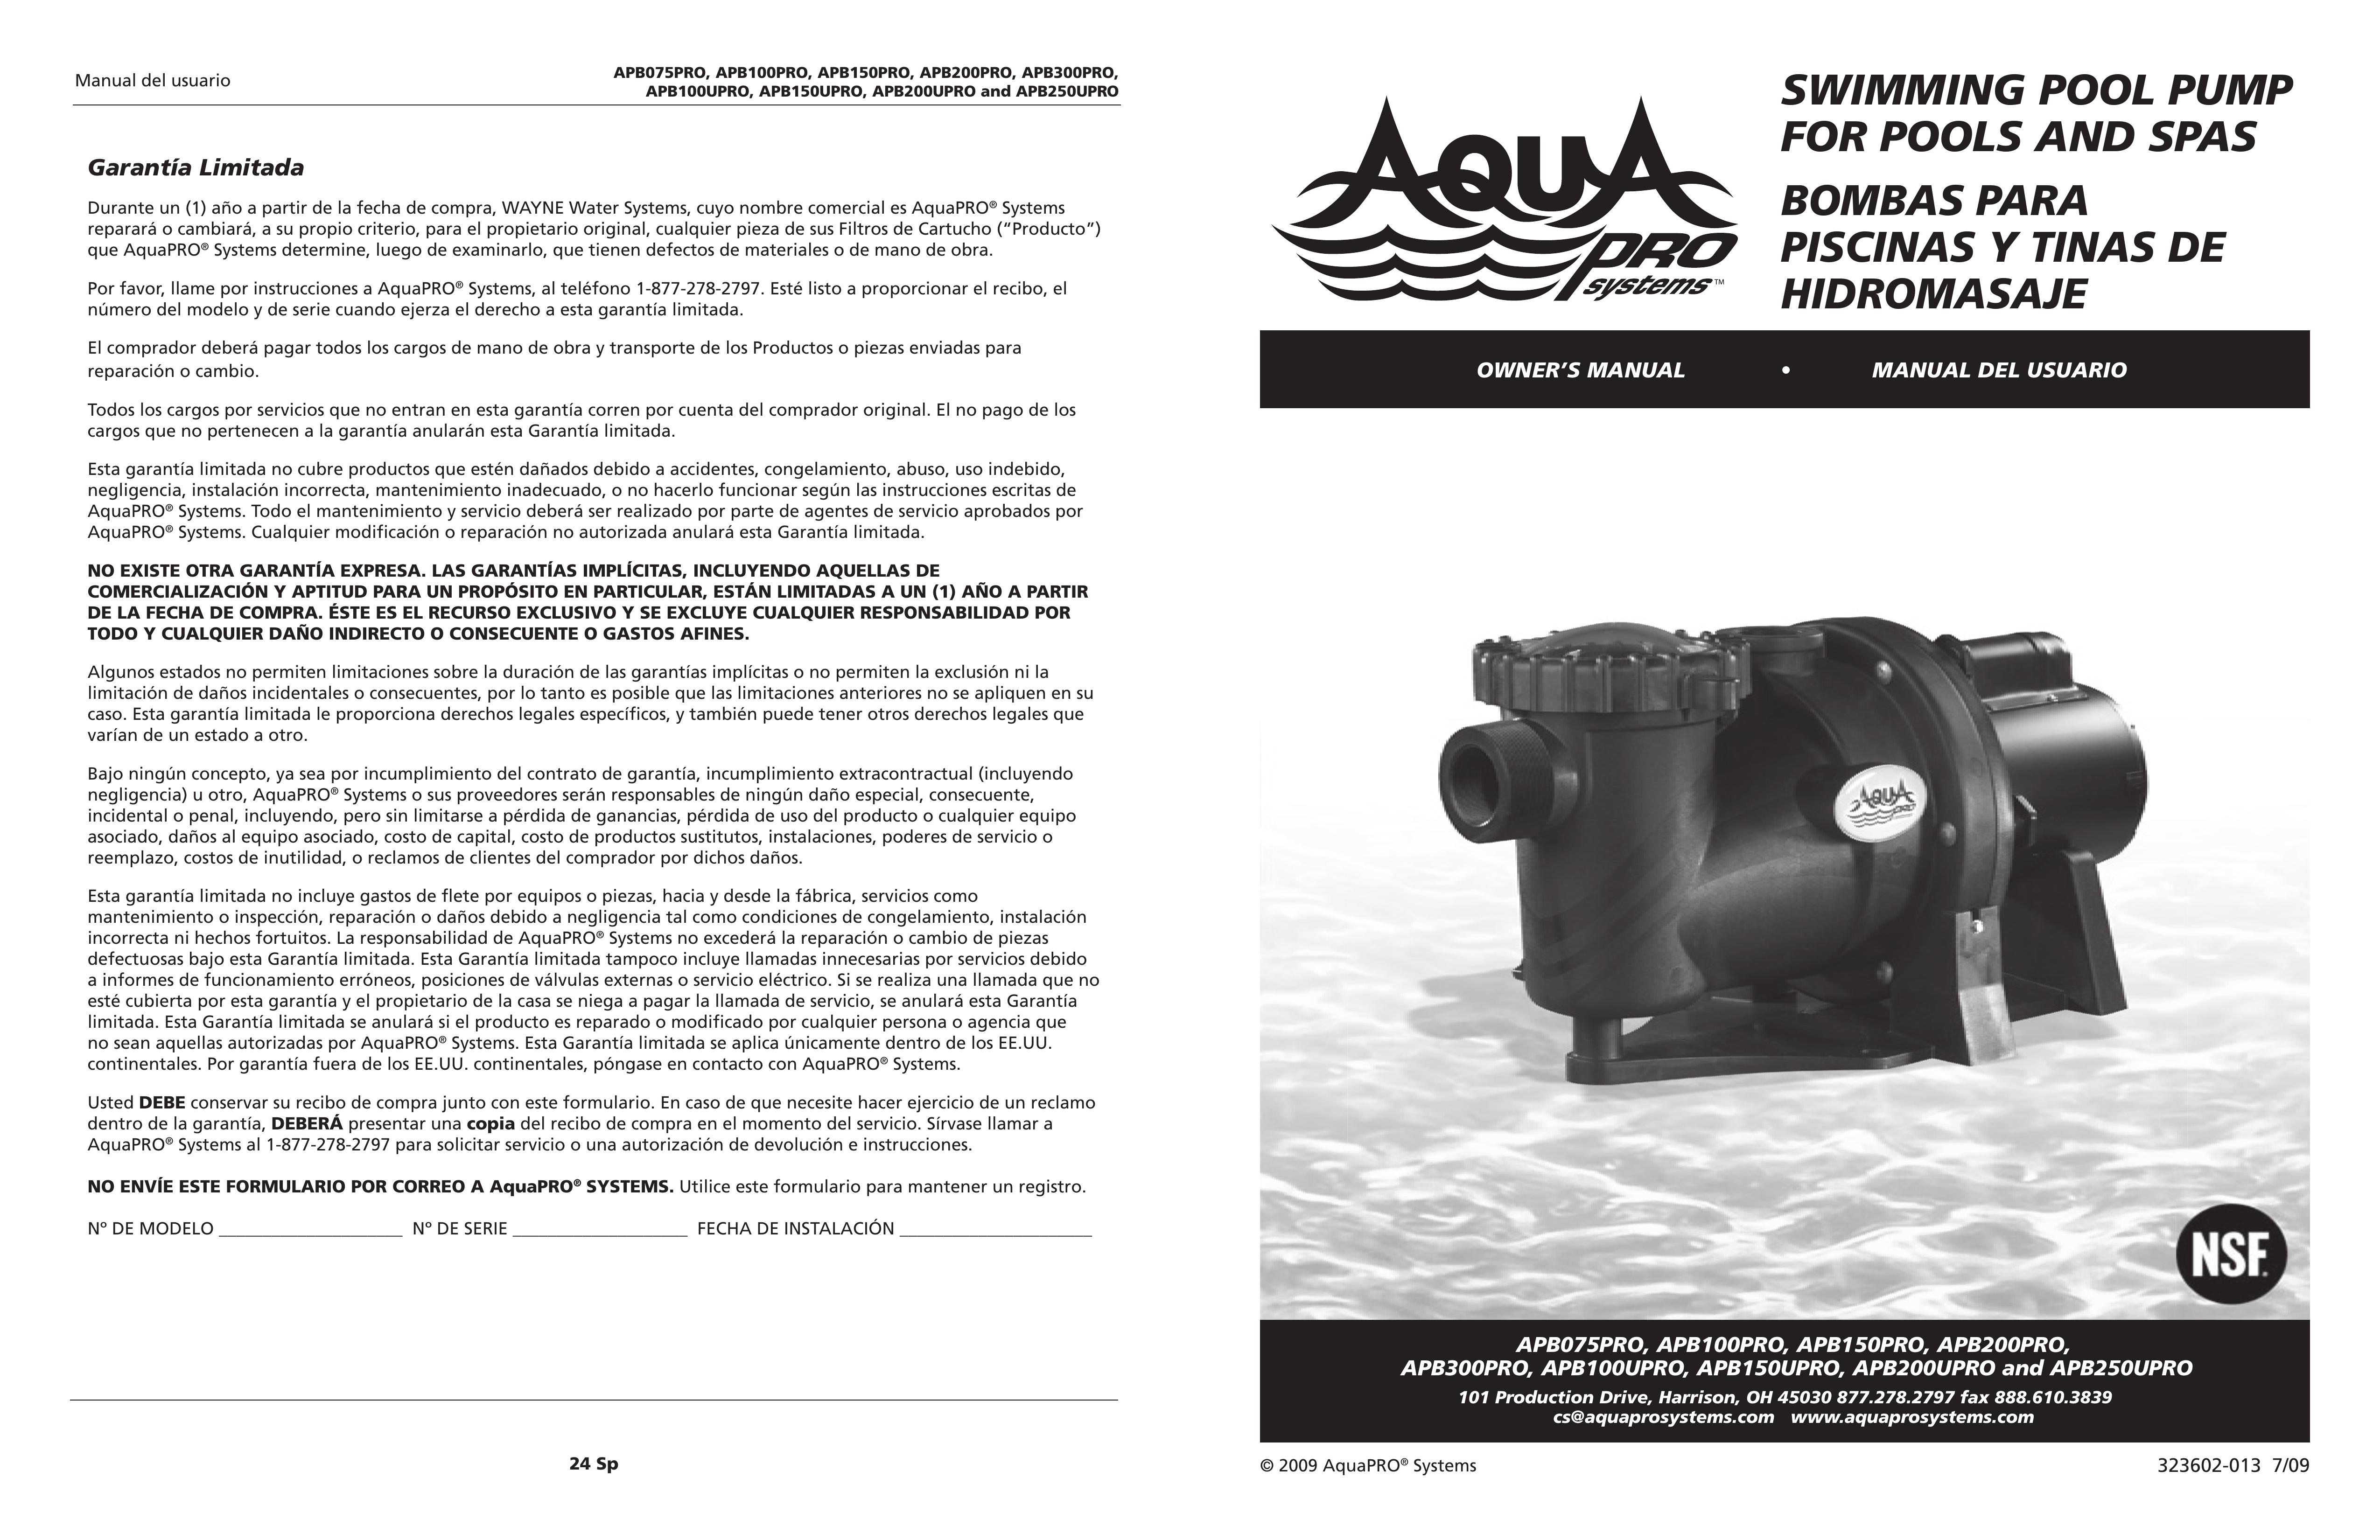 AquaPRO APB150PRO Swimming Pool Pump User Manual